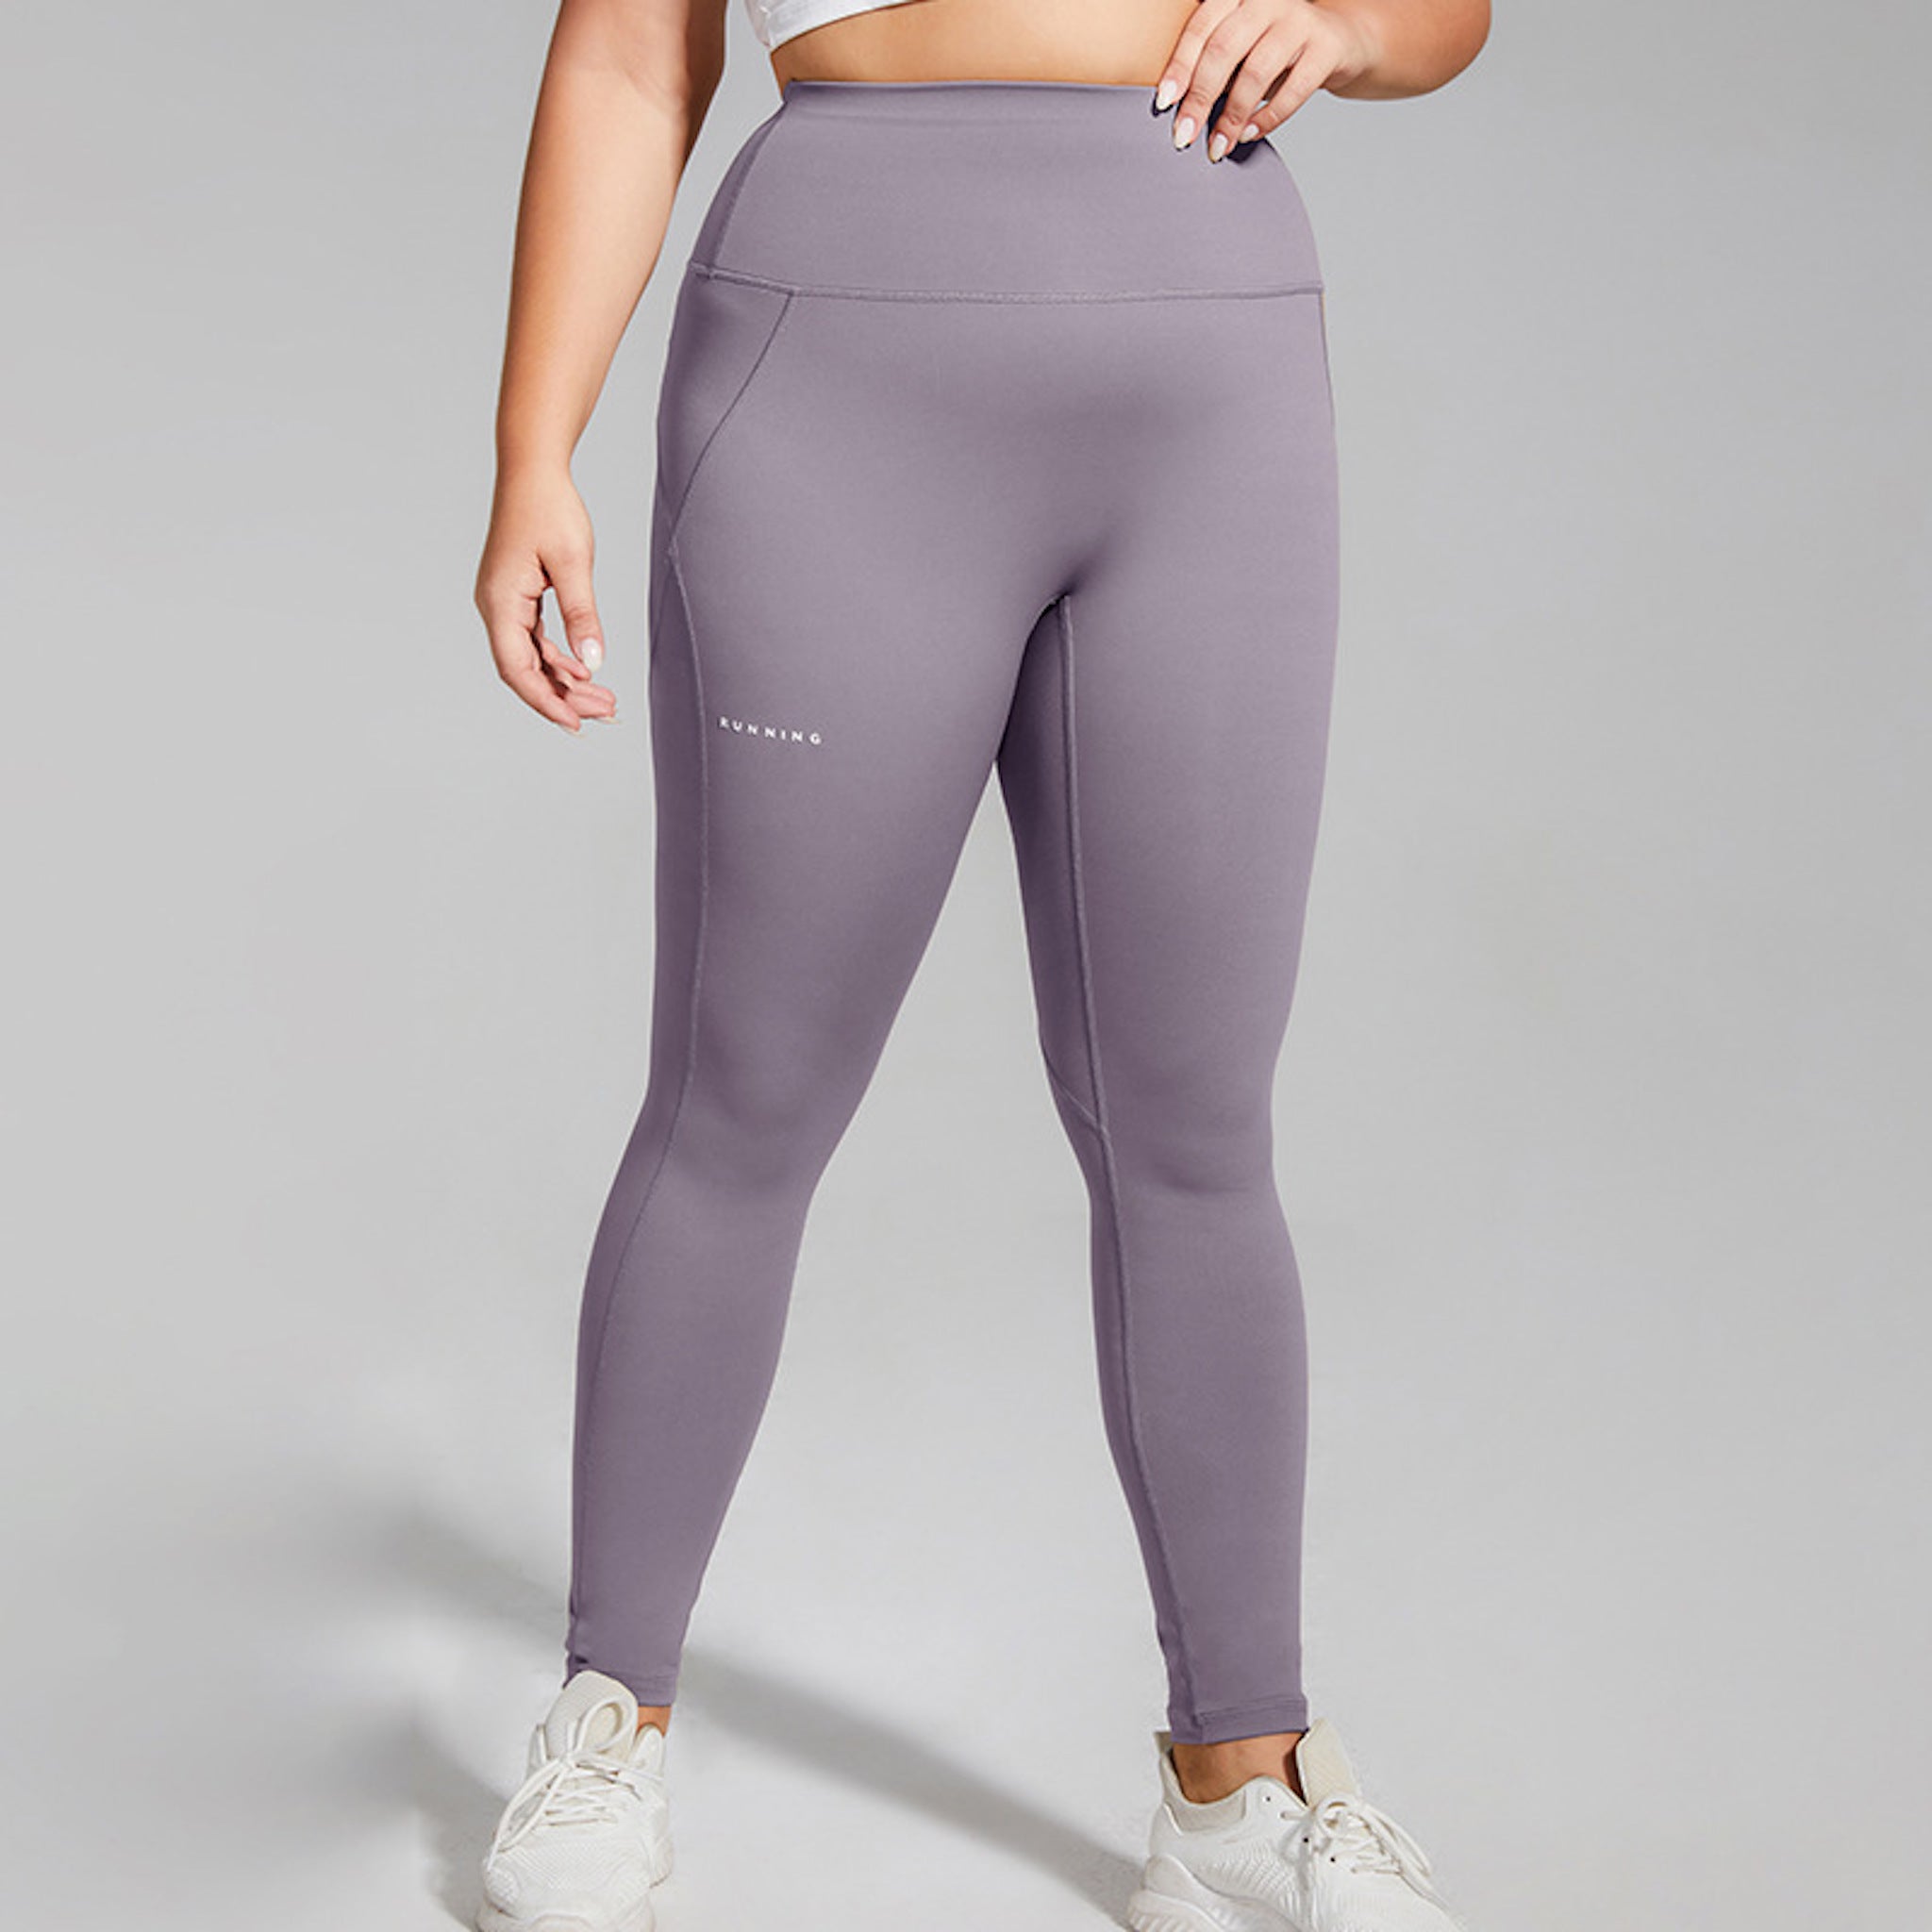 Women's High-Waisted Quick Dry Yoga Pants  UponBasics Light Purple S 